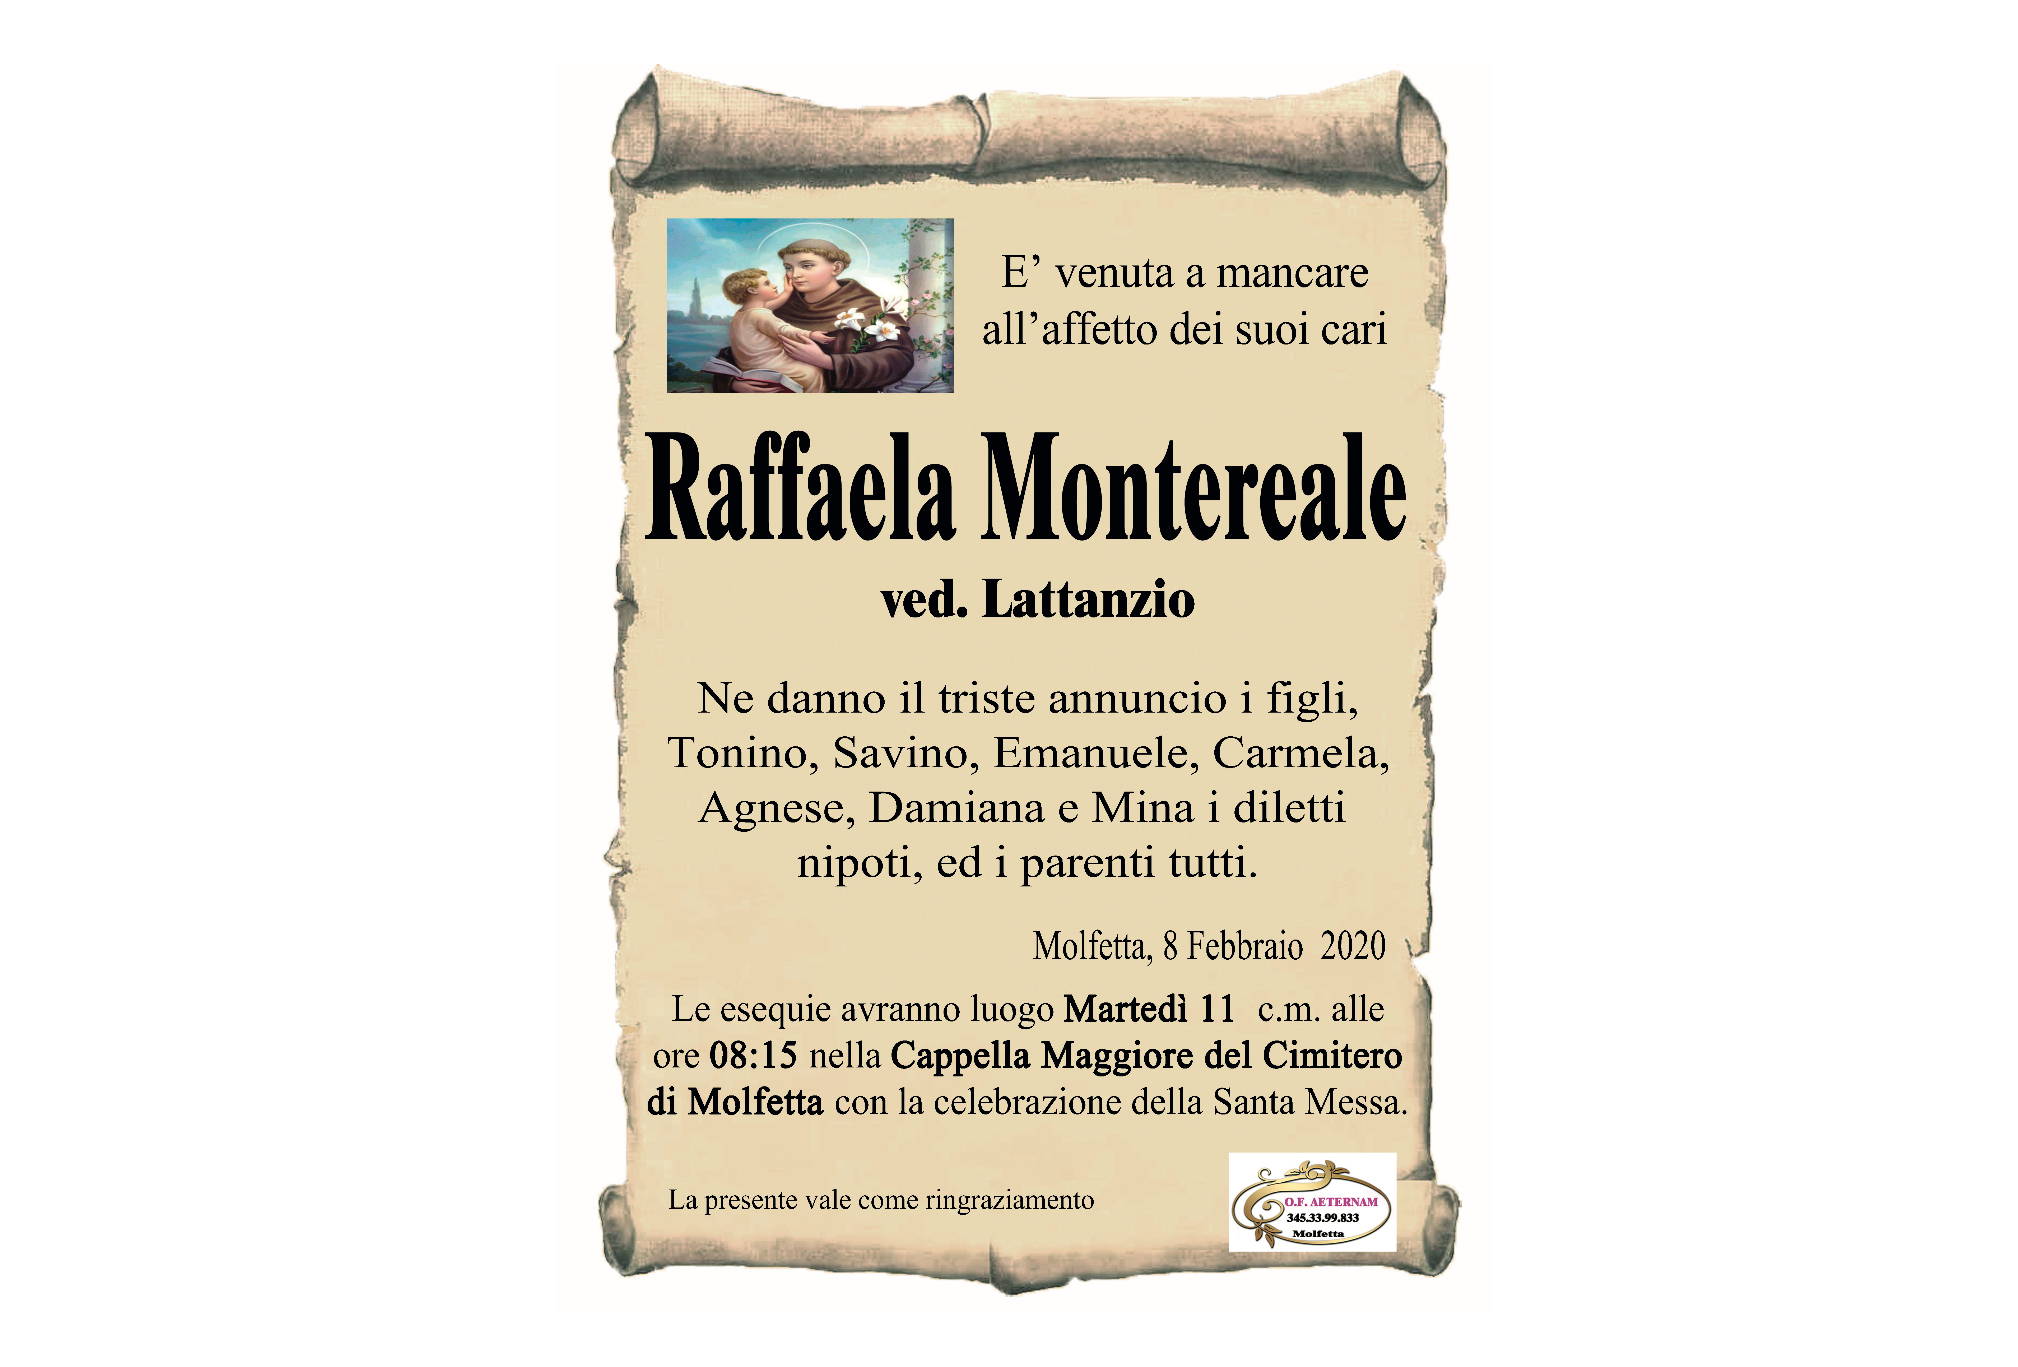 Raffaela Montereale